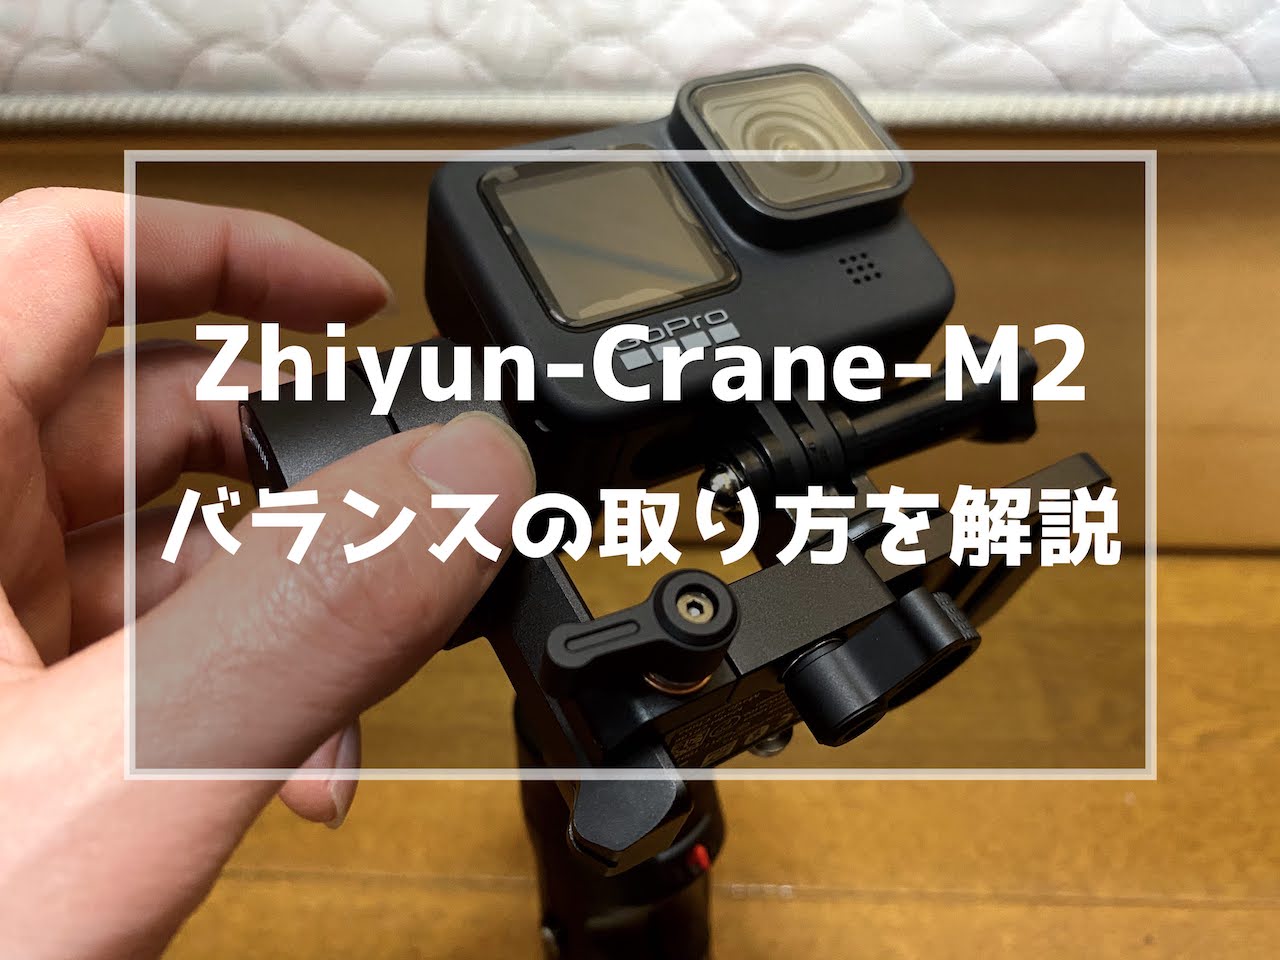 Zhiyun-Crane-M2 goproのバランス調整方法